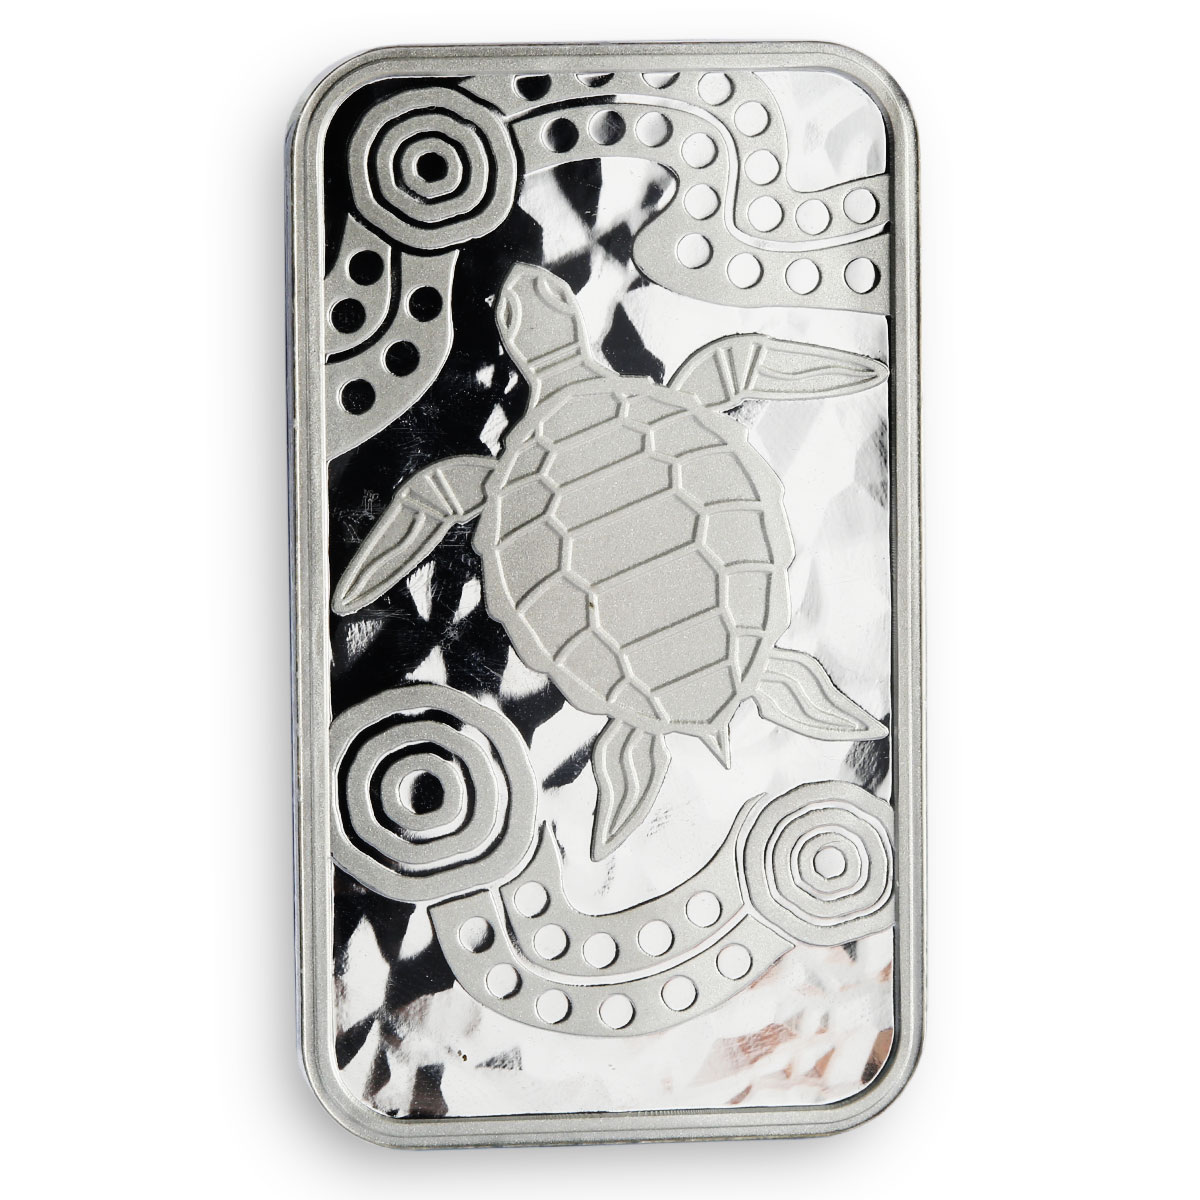 Australia 1 dollar Turtle Dreaming Series silver rectangular 1 oz coin 2008